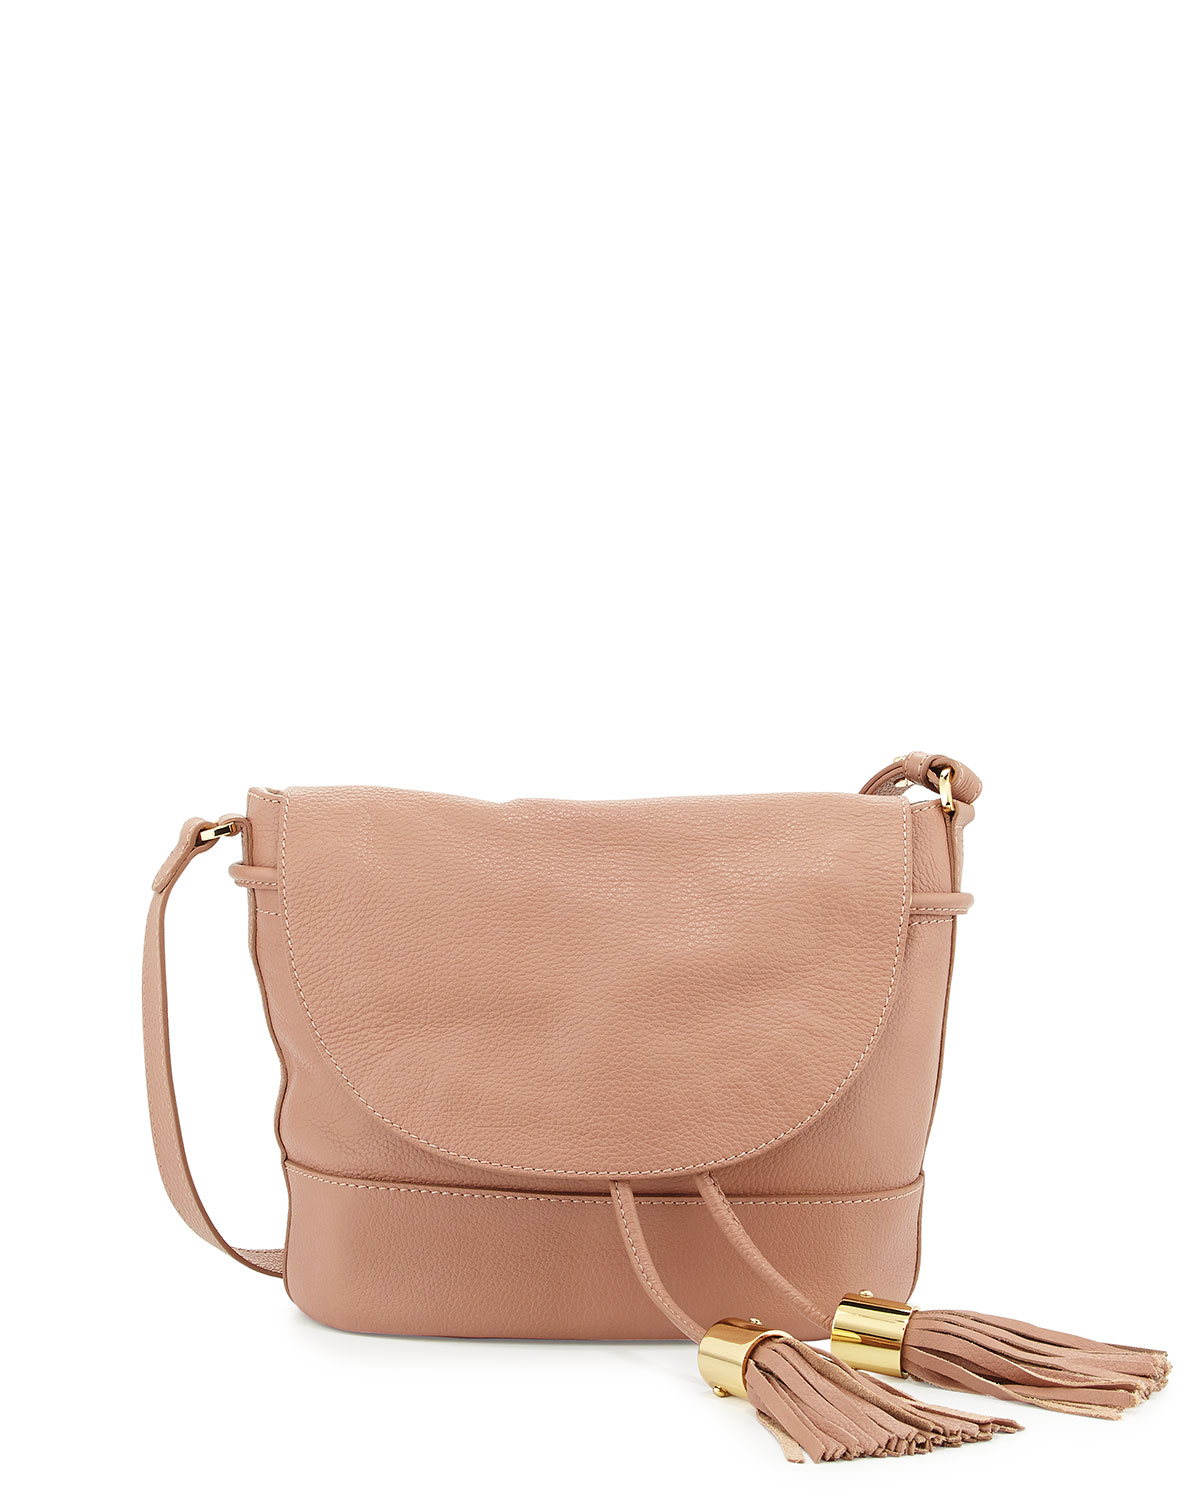 See by chloé Vicki Vachetta Leather Crossbody Bag in Pink | Lyst